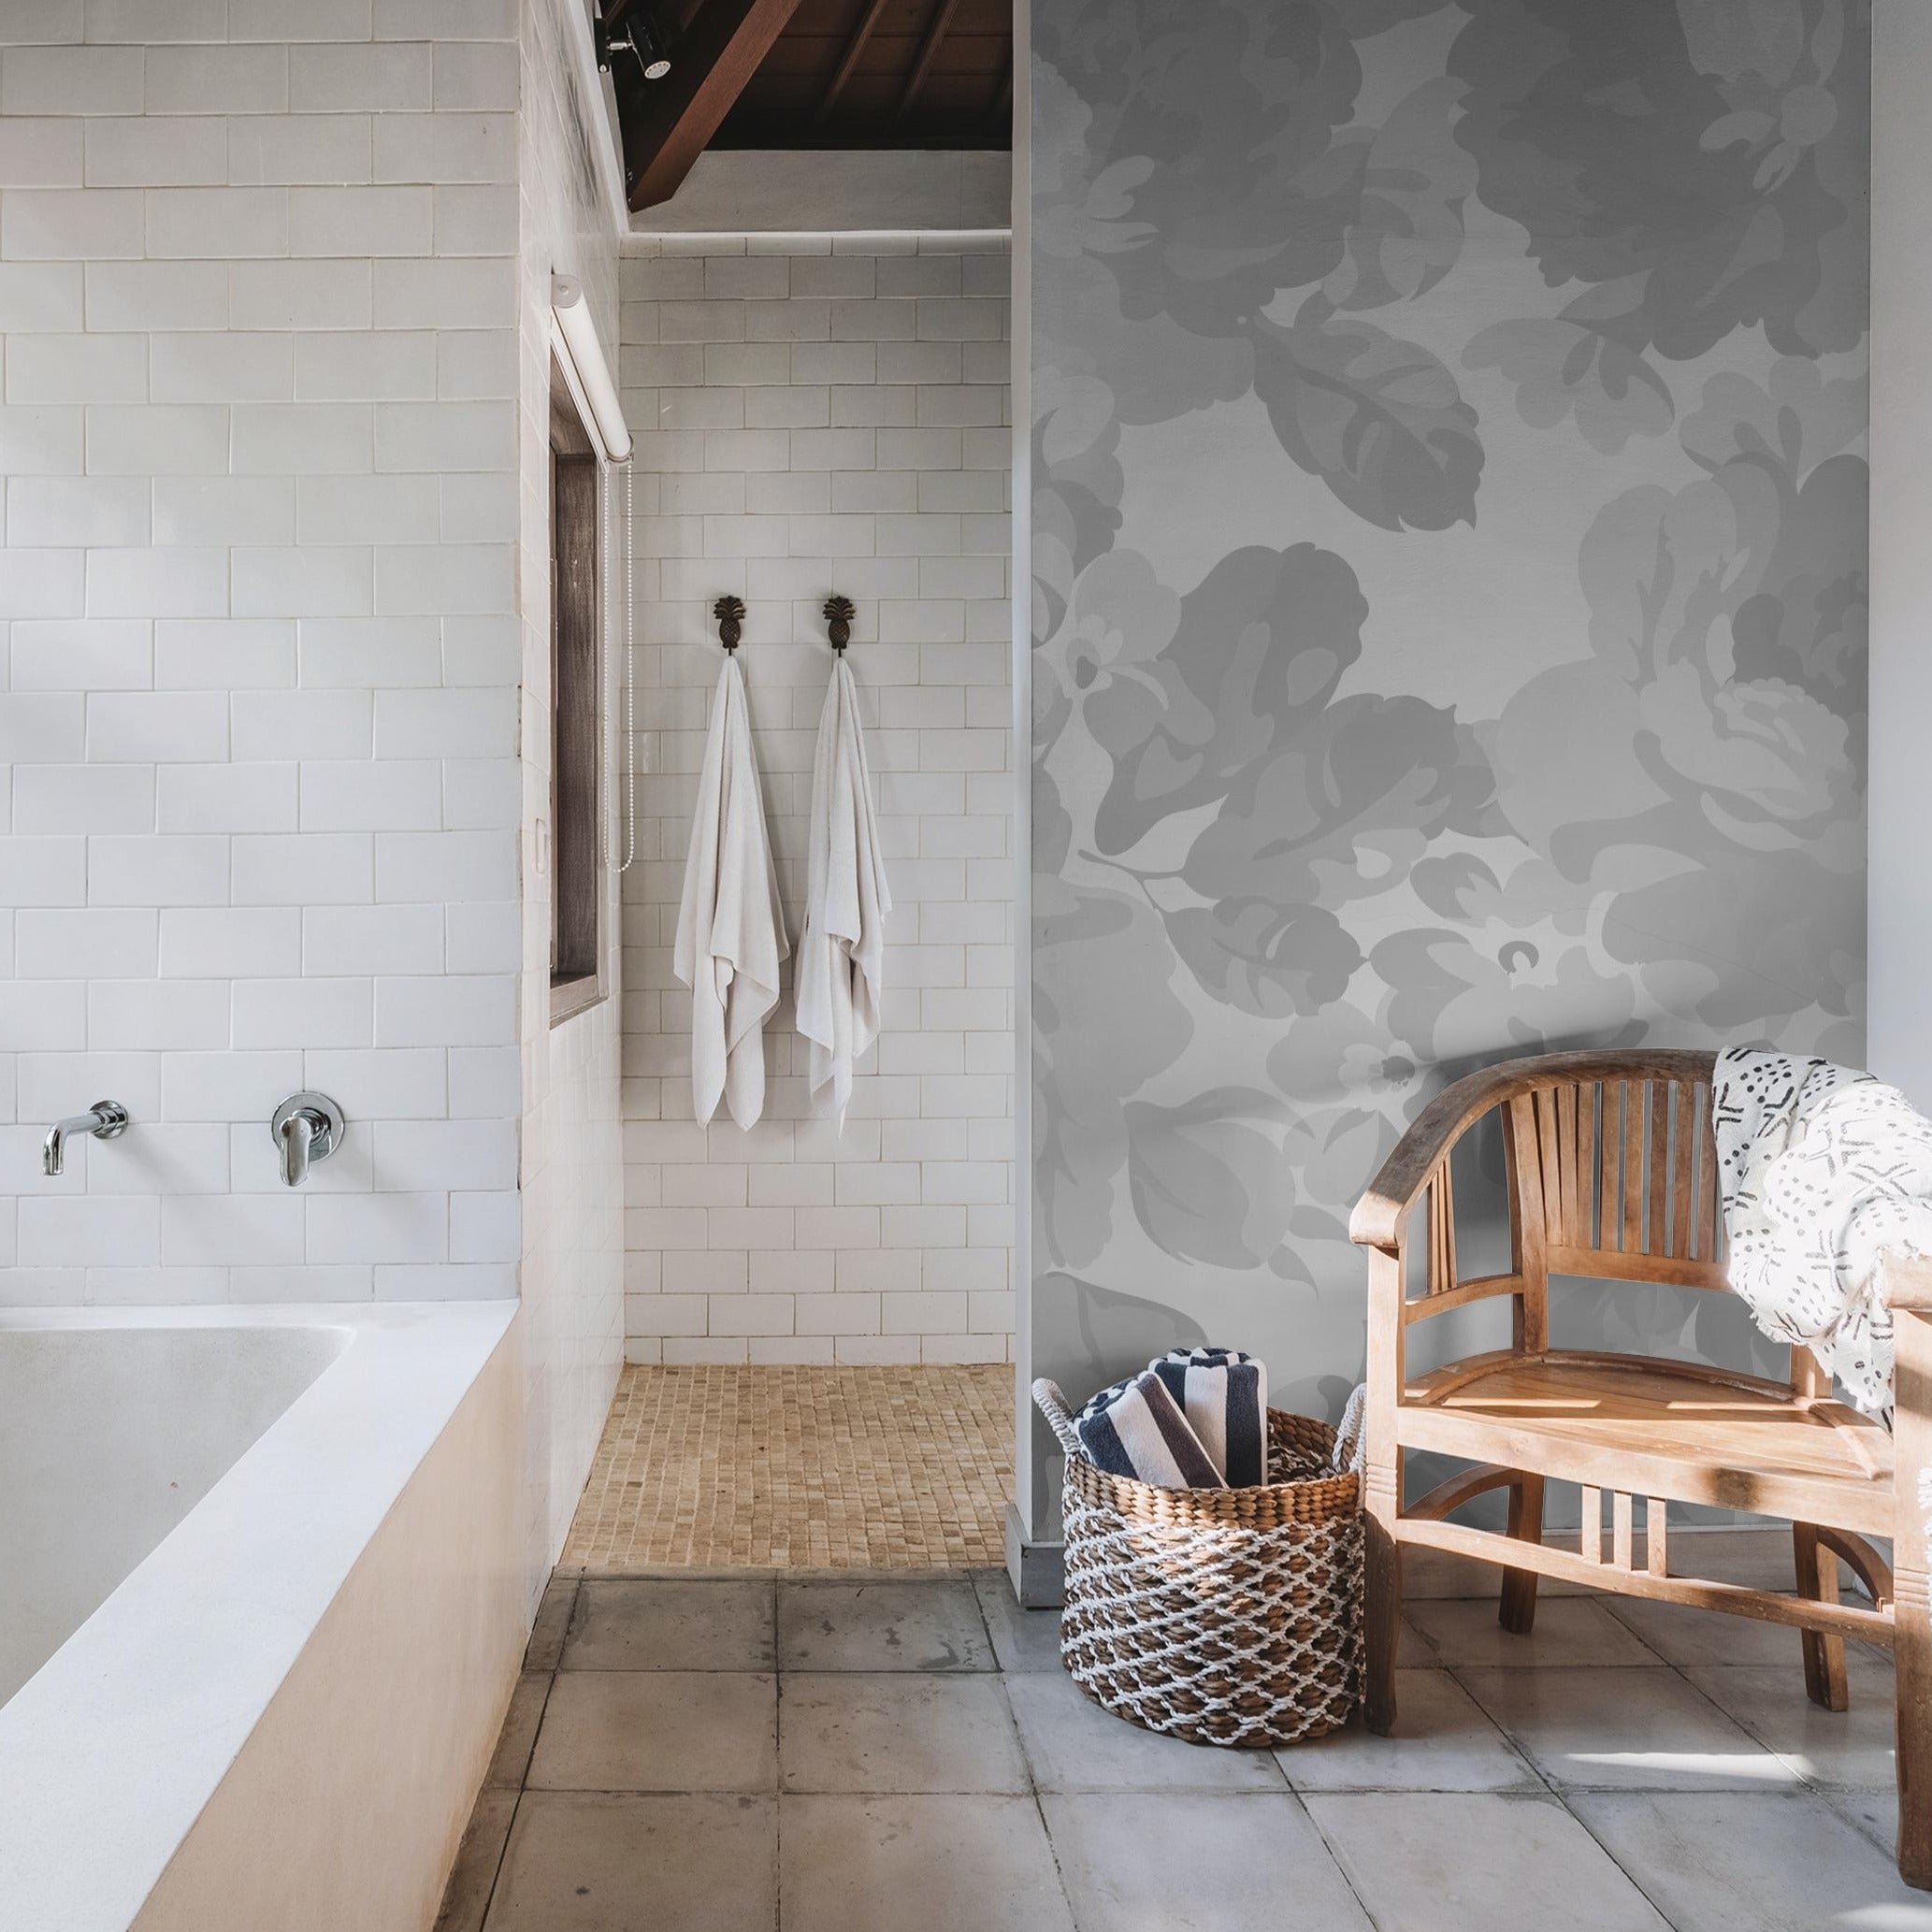 "Terra Bloom (Gray) Wallpaper by Wall Blush in a stylish modern bathroom with focus on elegant floral design."